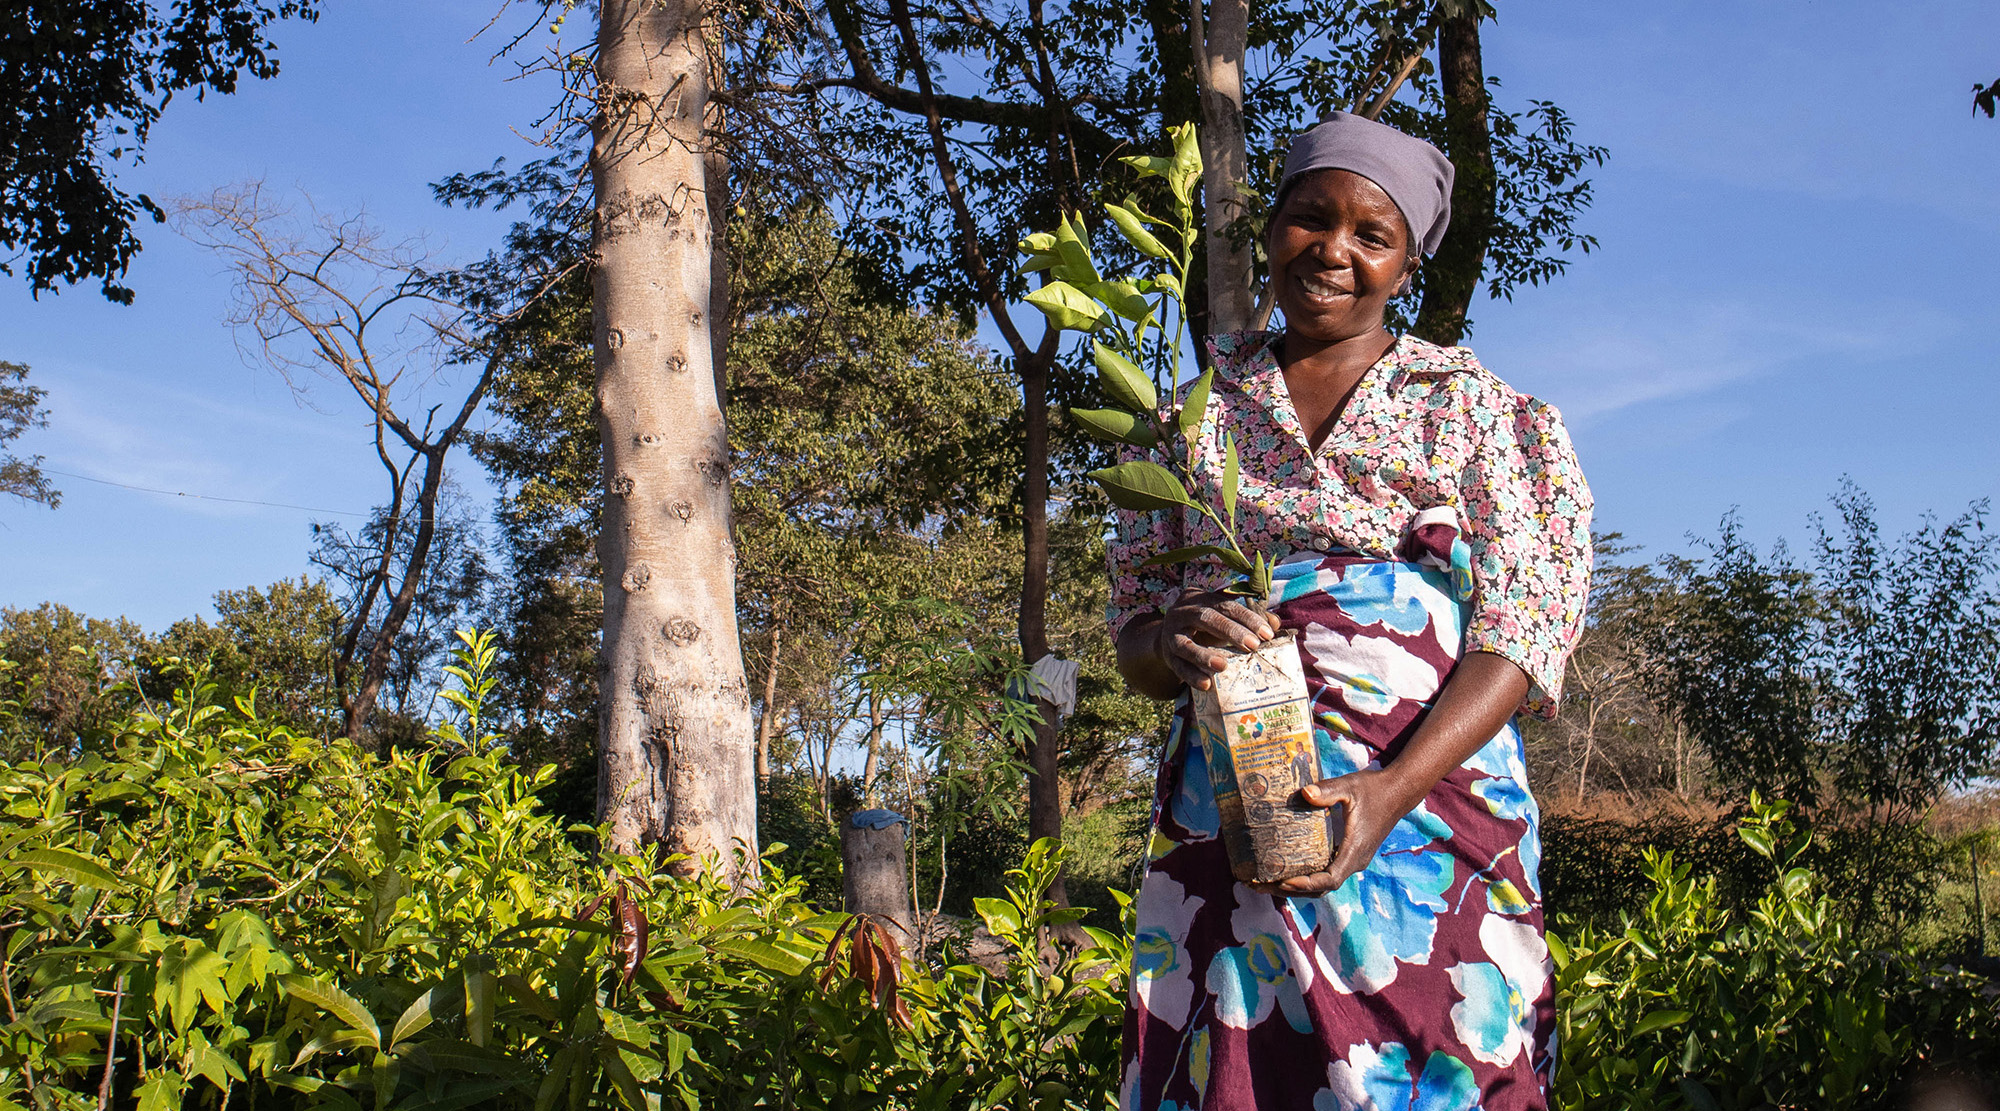 ZMB_KAT_Fieldwork_enrichment seedlings for Katanino grown in Luanshya_WF#798_Mary Siwakwi_4_20200501_©Mulako_WeForest